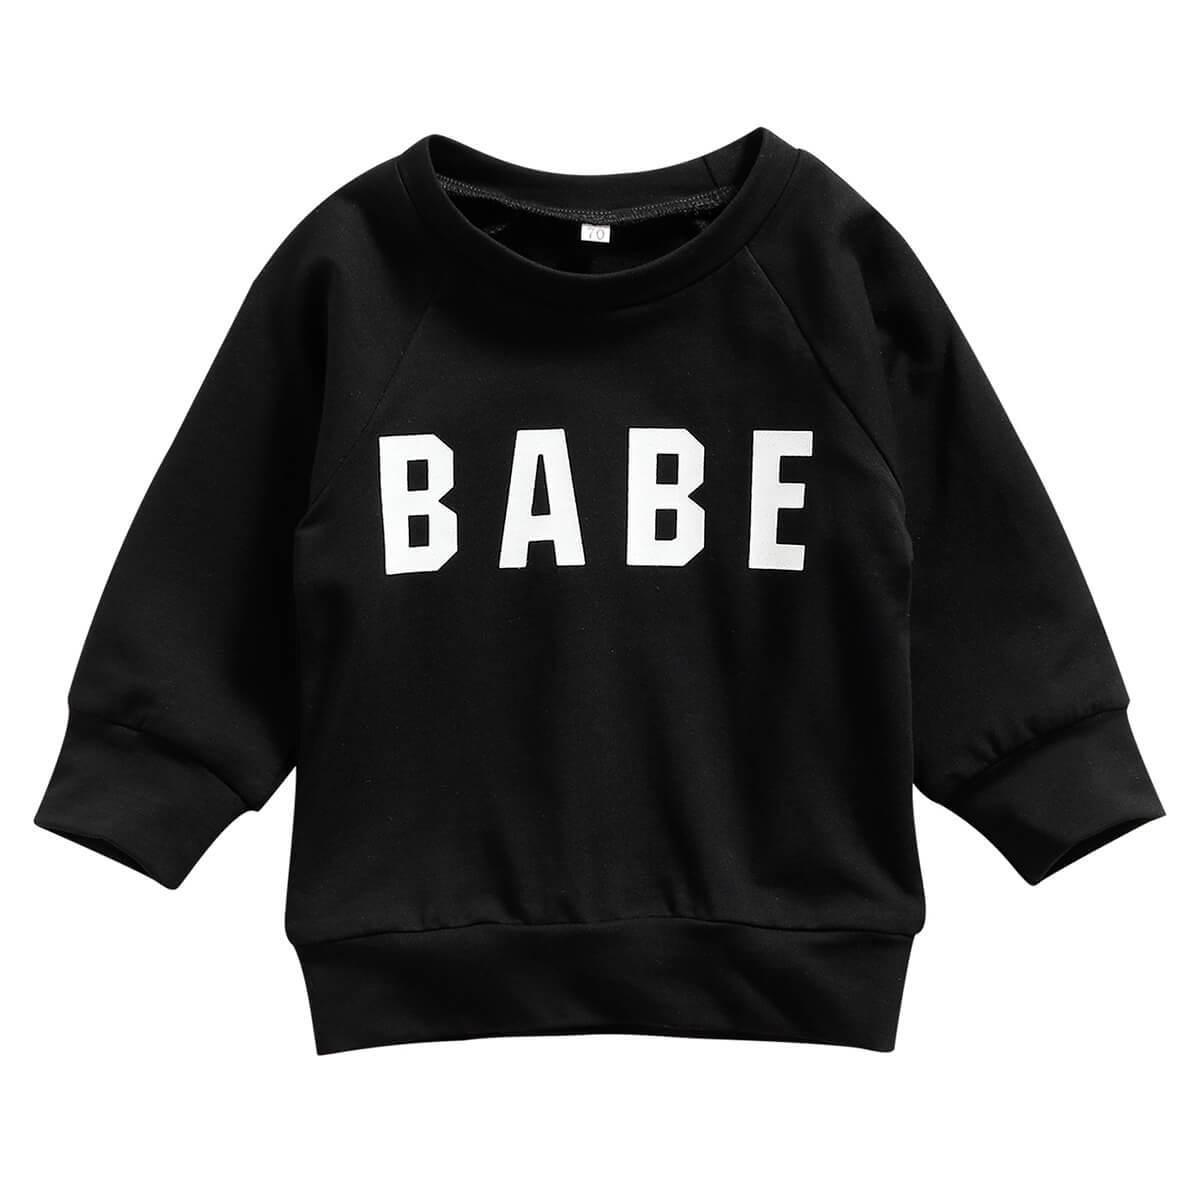 Babe Baby Sweatshirt Black 3-6 M 